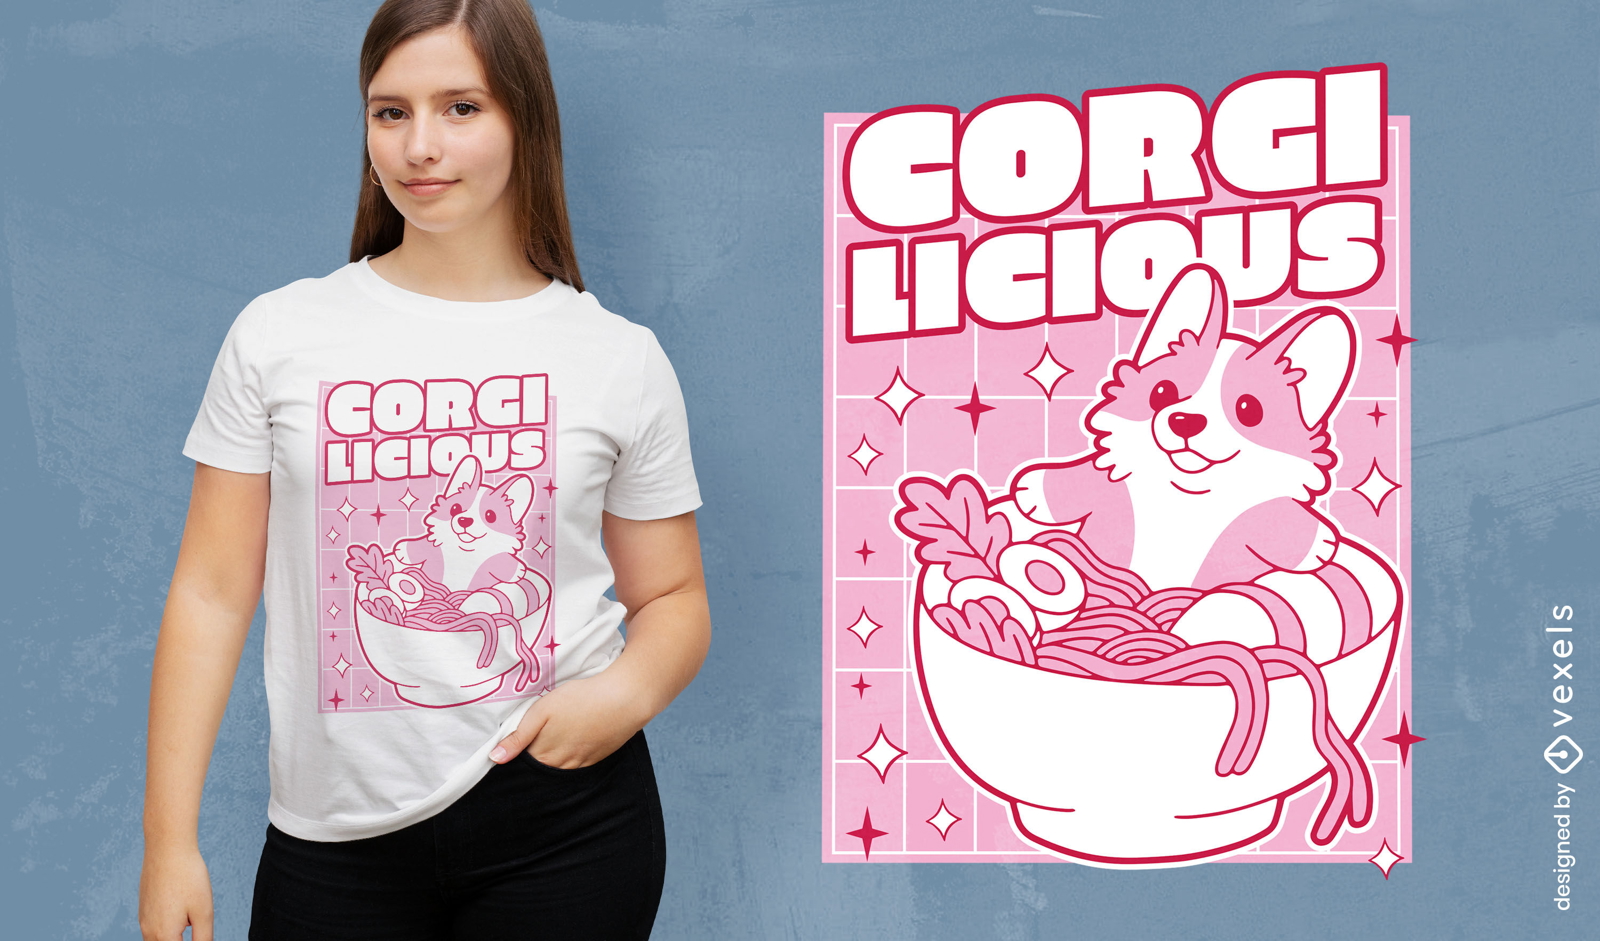 Corgi dog ramen t-shirt design